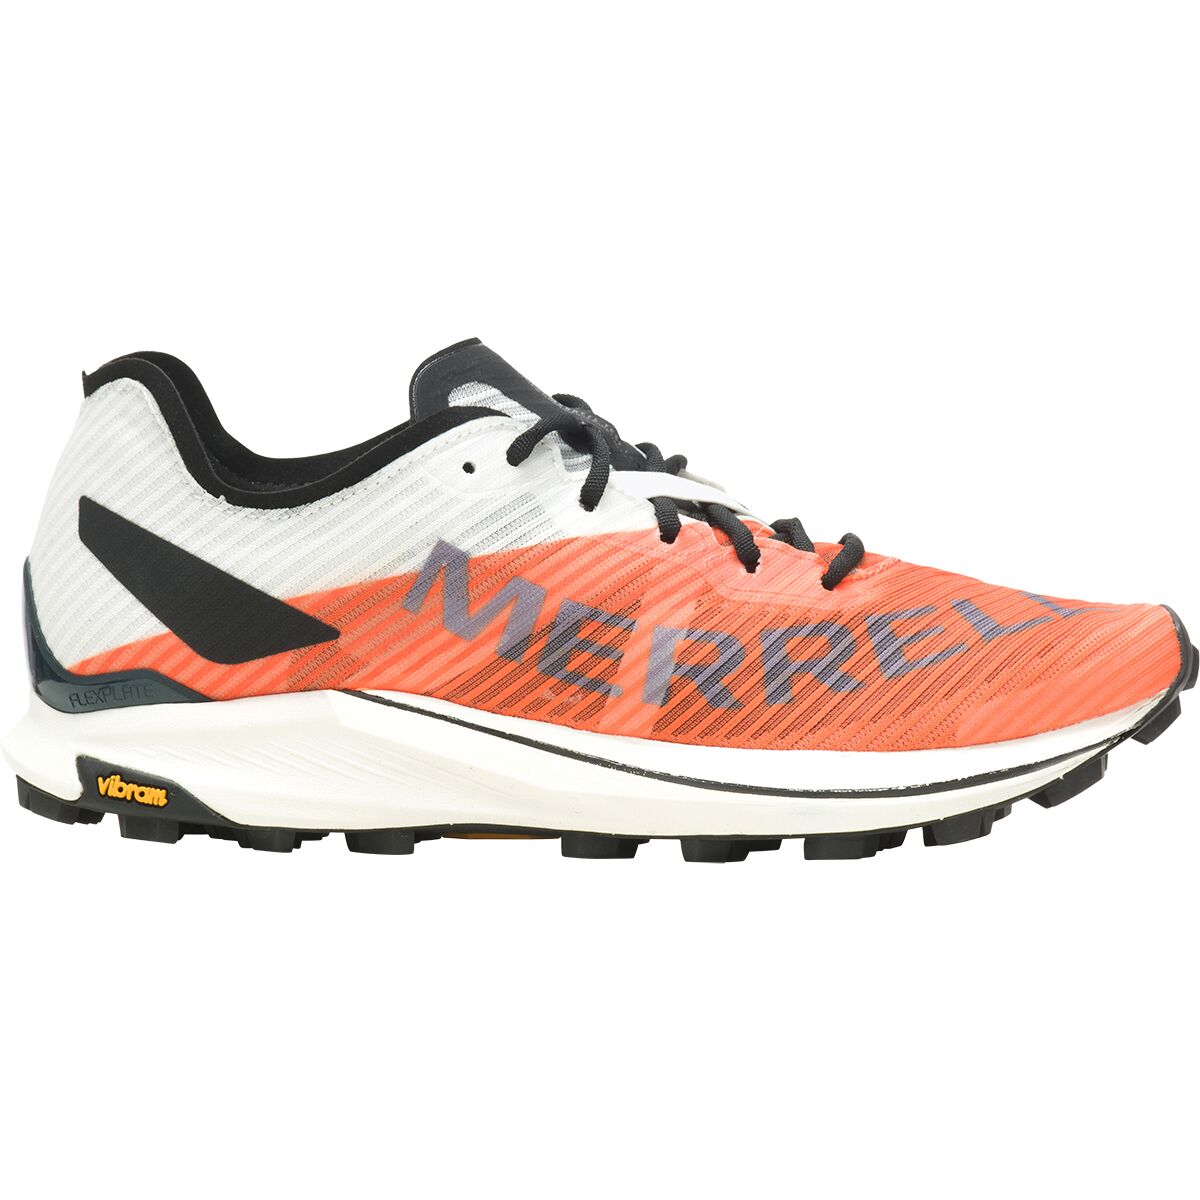 Merrell MTL Skyfire 2 Trail Running Shoe - Women's